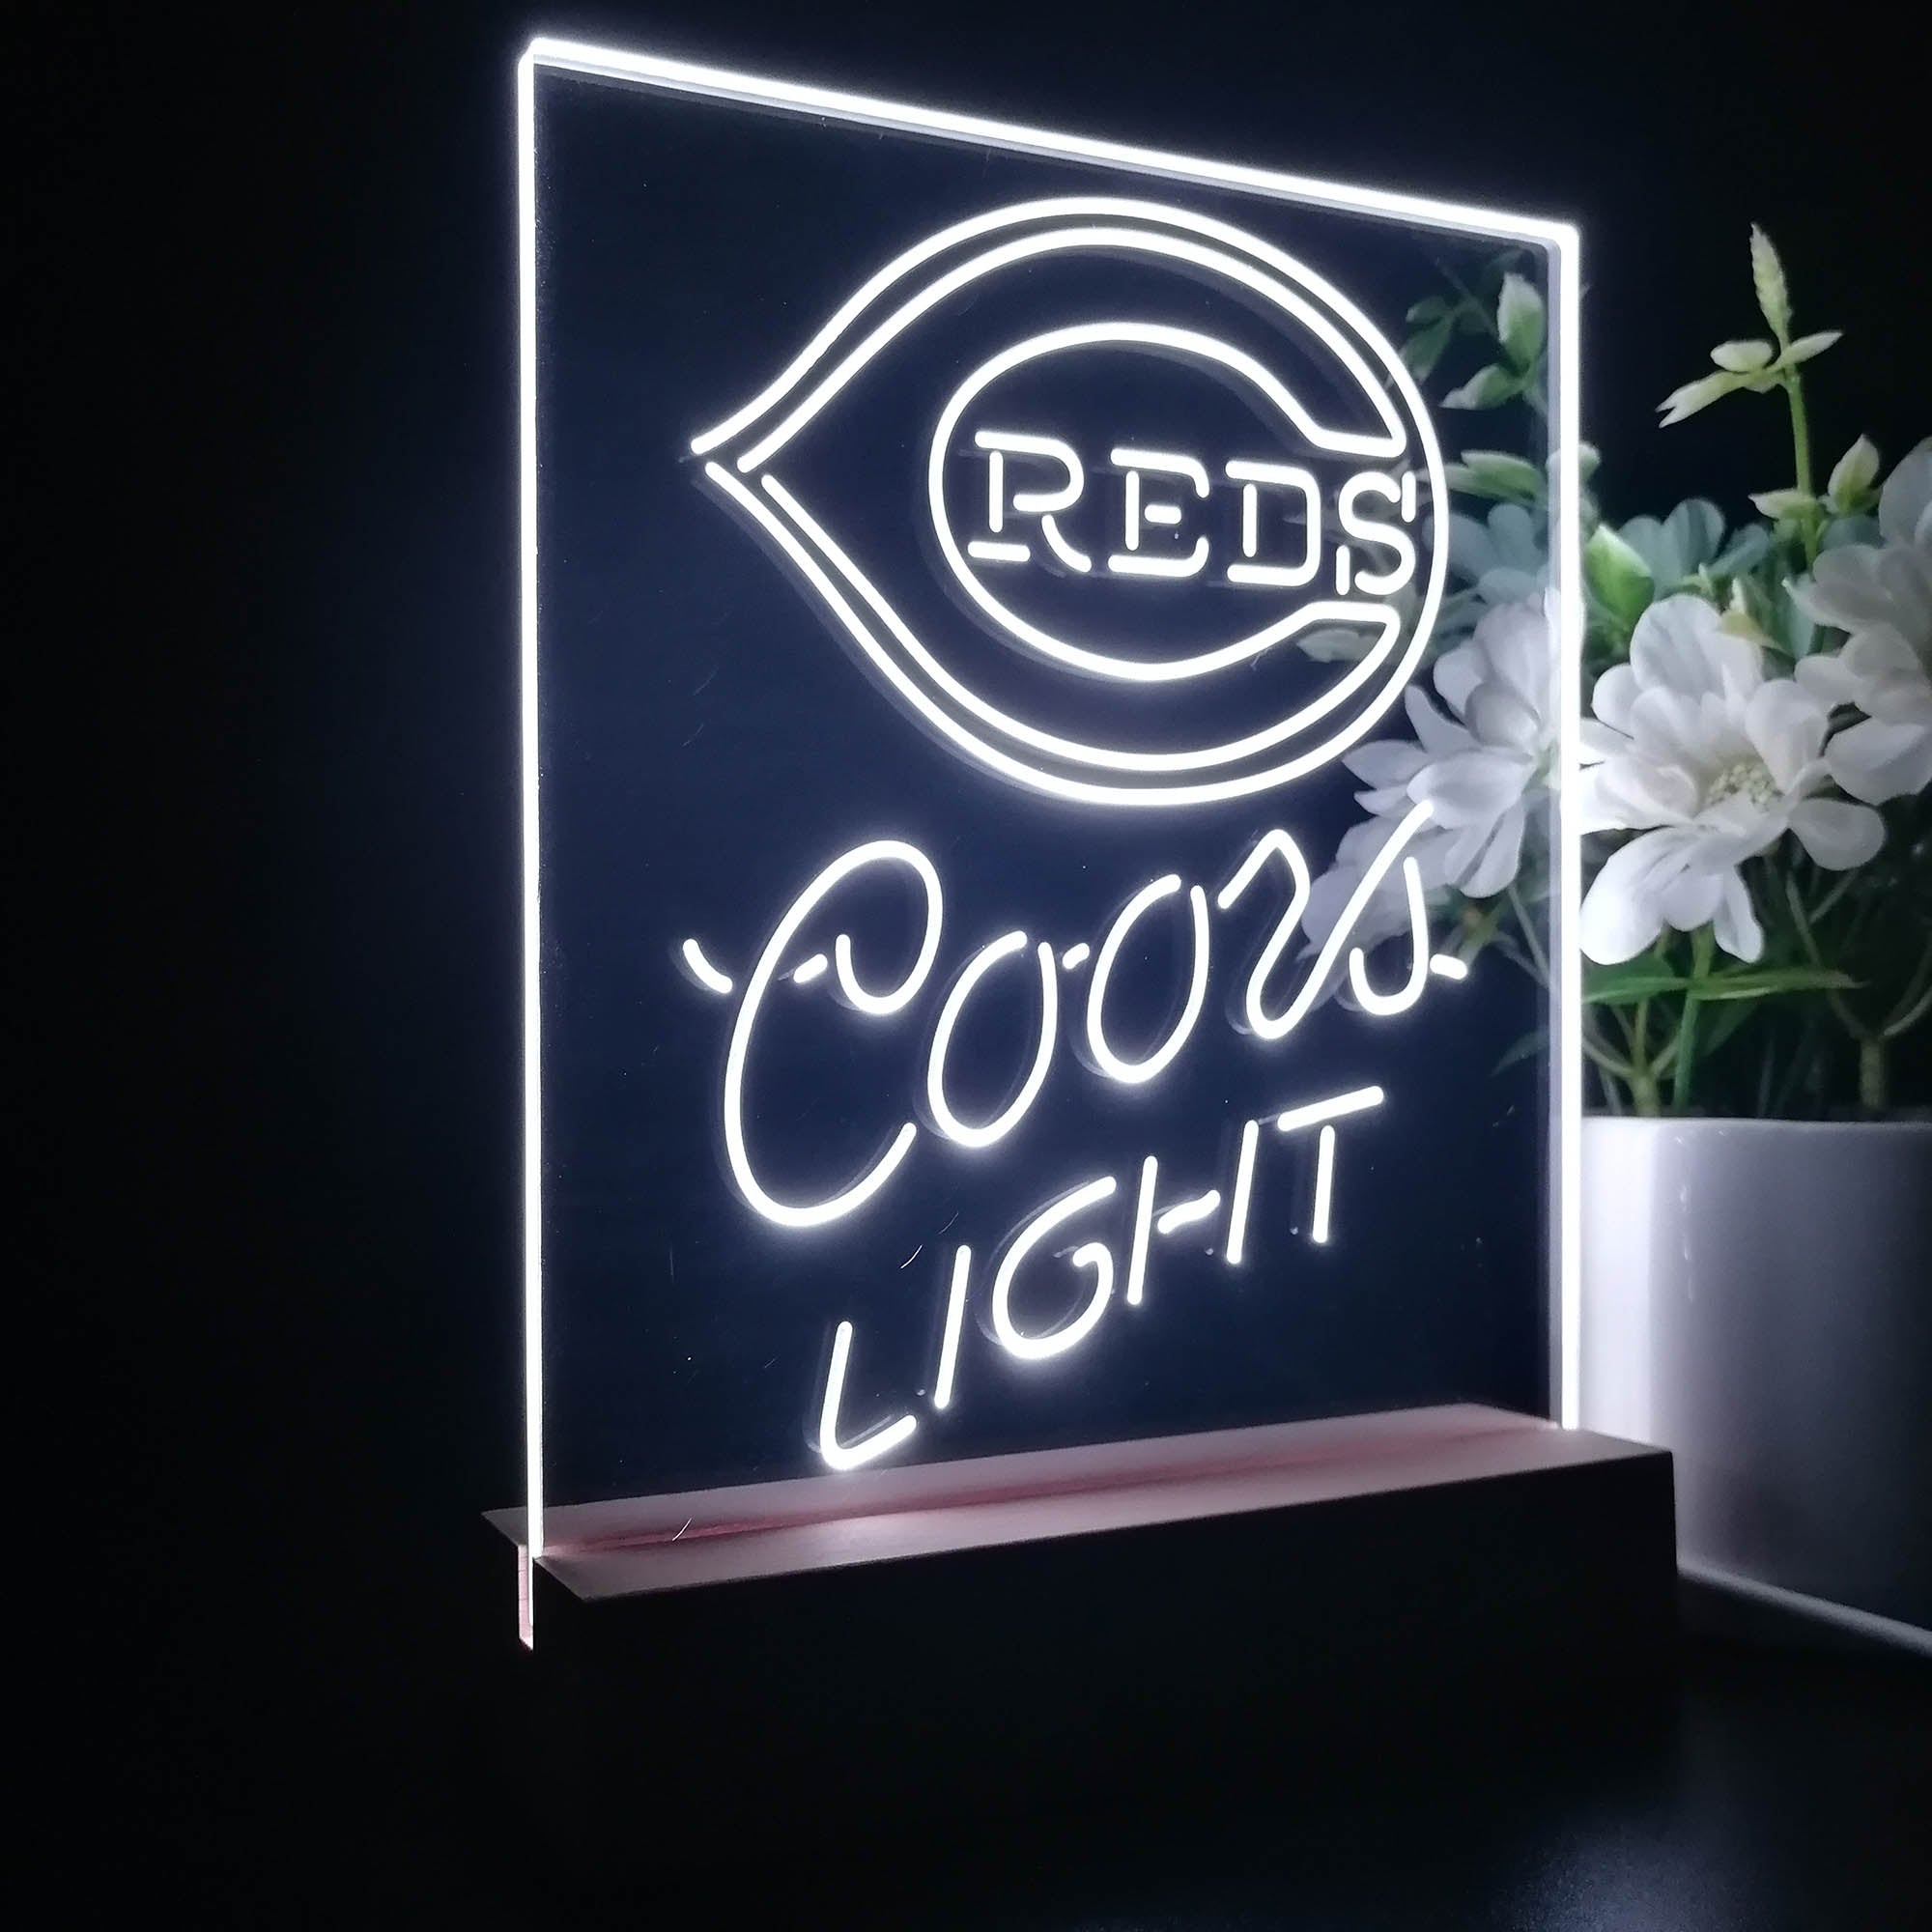 Cincinnati Reds Coors Light 3D LED Optical Illusion Sport Team Night Light